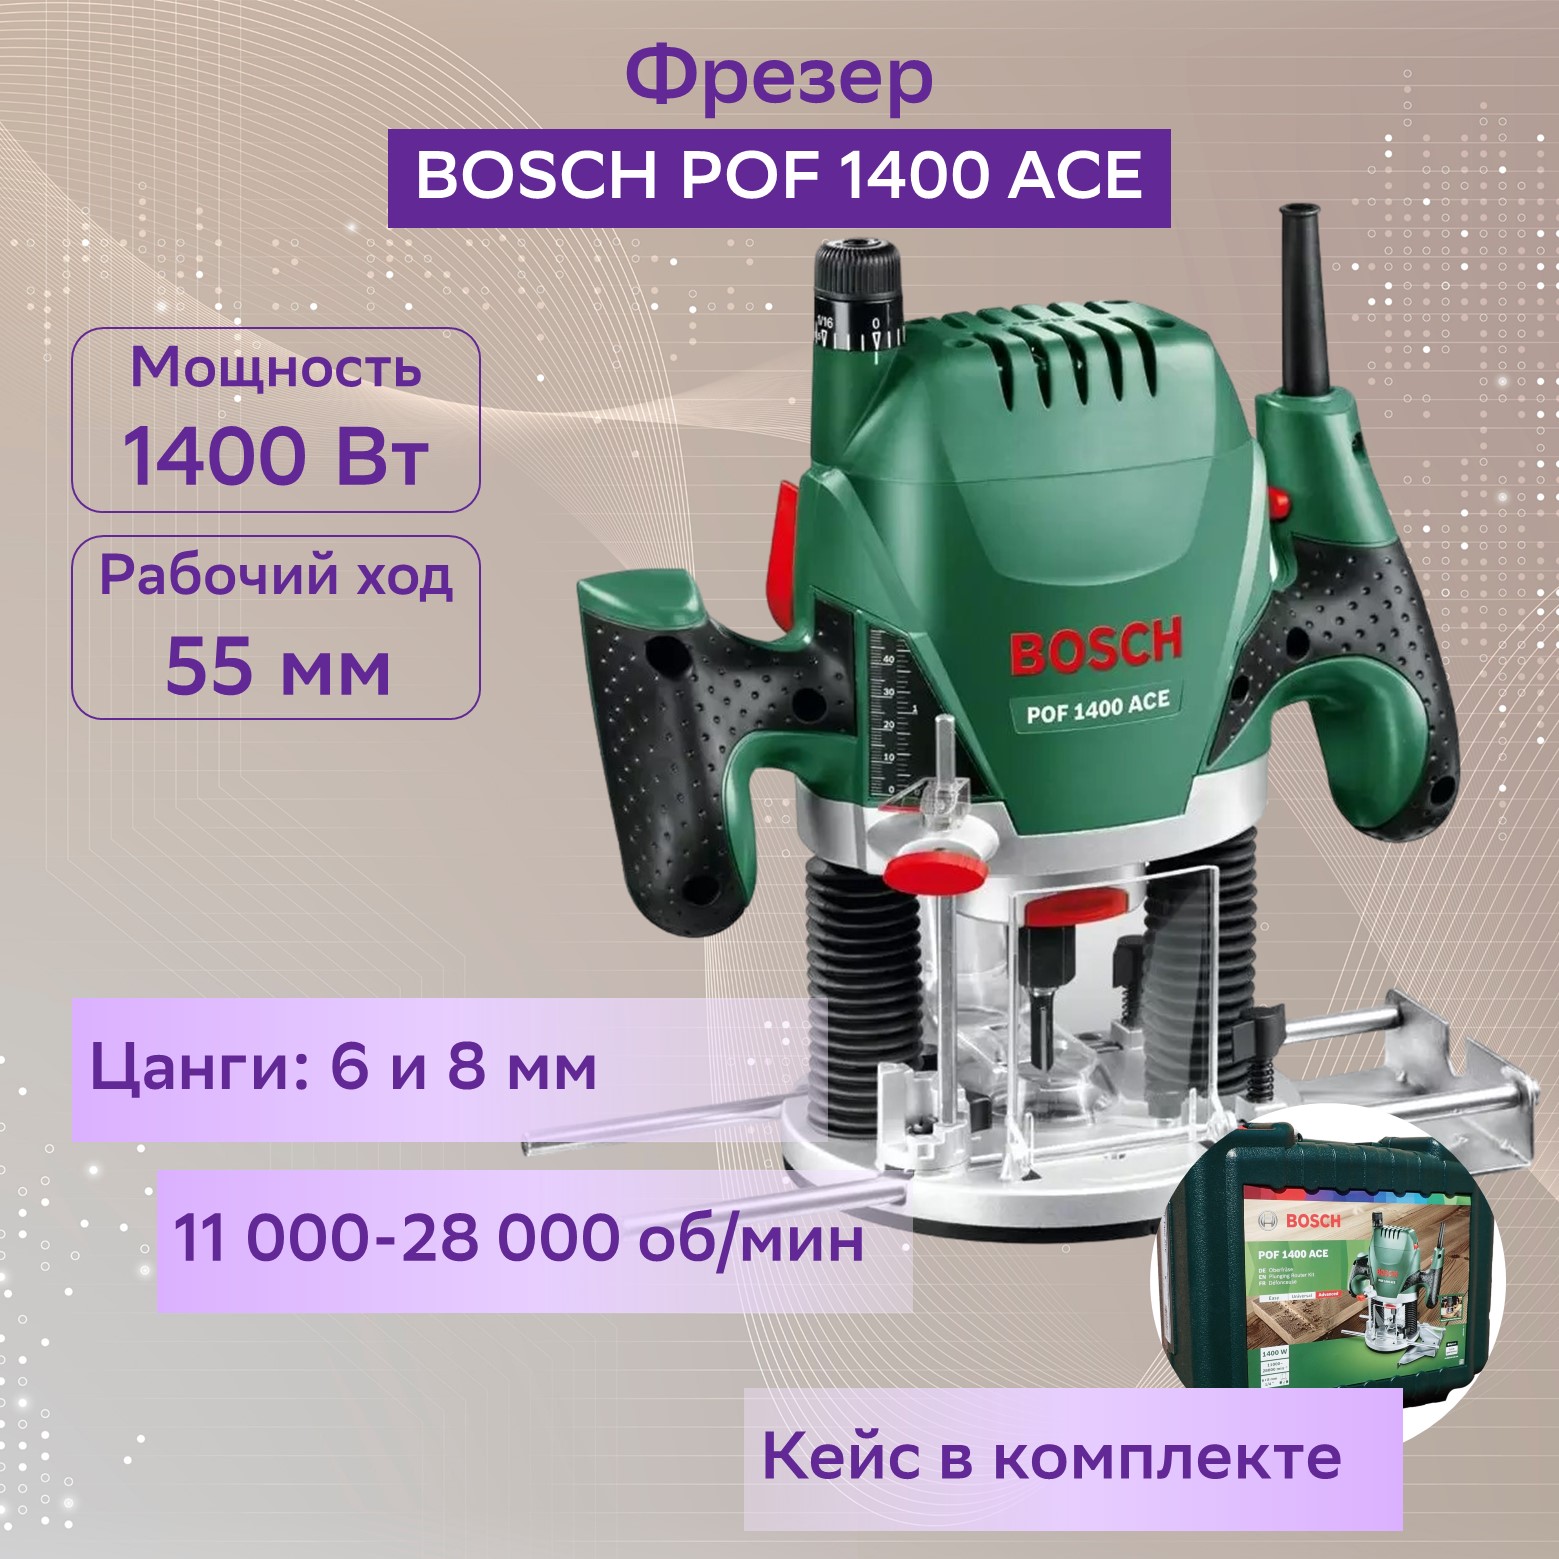 Бош 1400 купить. Фрезер бош 1400. Bosch POF 1400 Ace. POF 1400 Ace. Фрейзер бош 1400 профи.